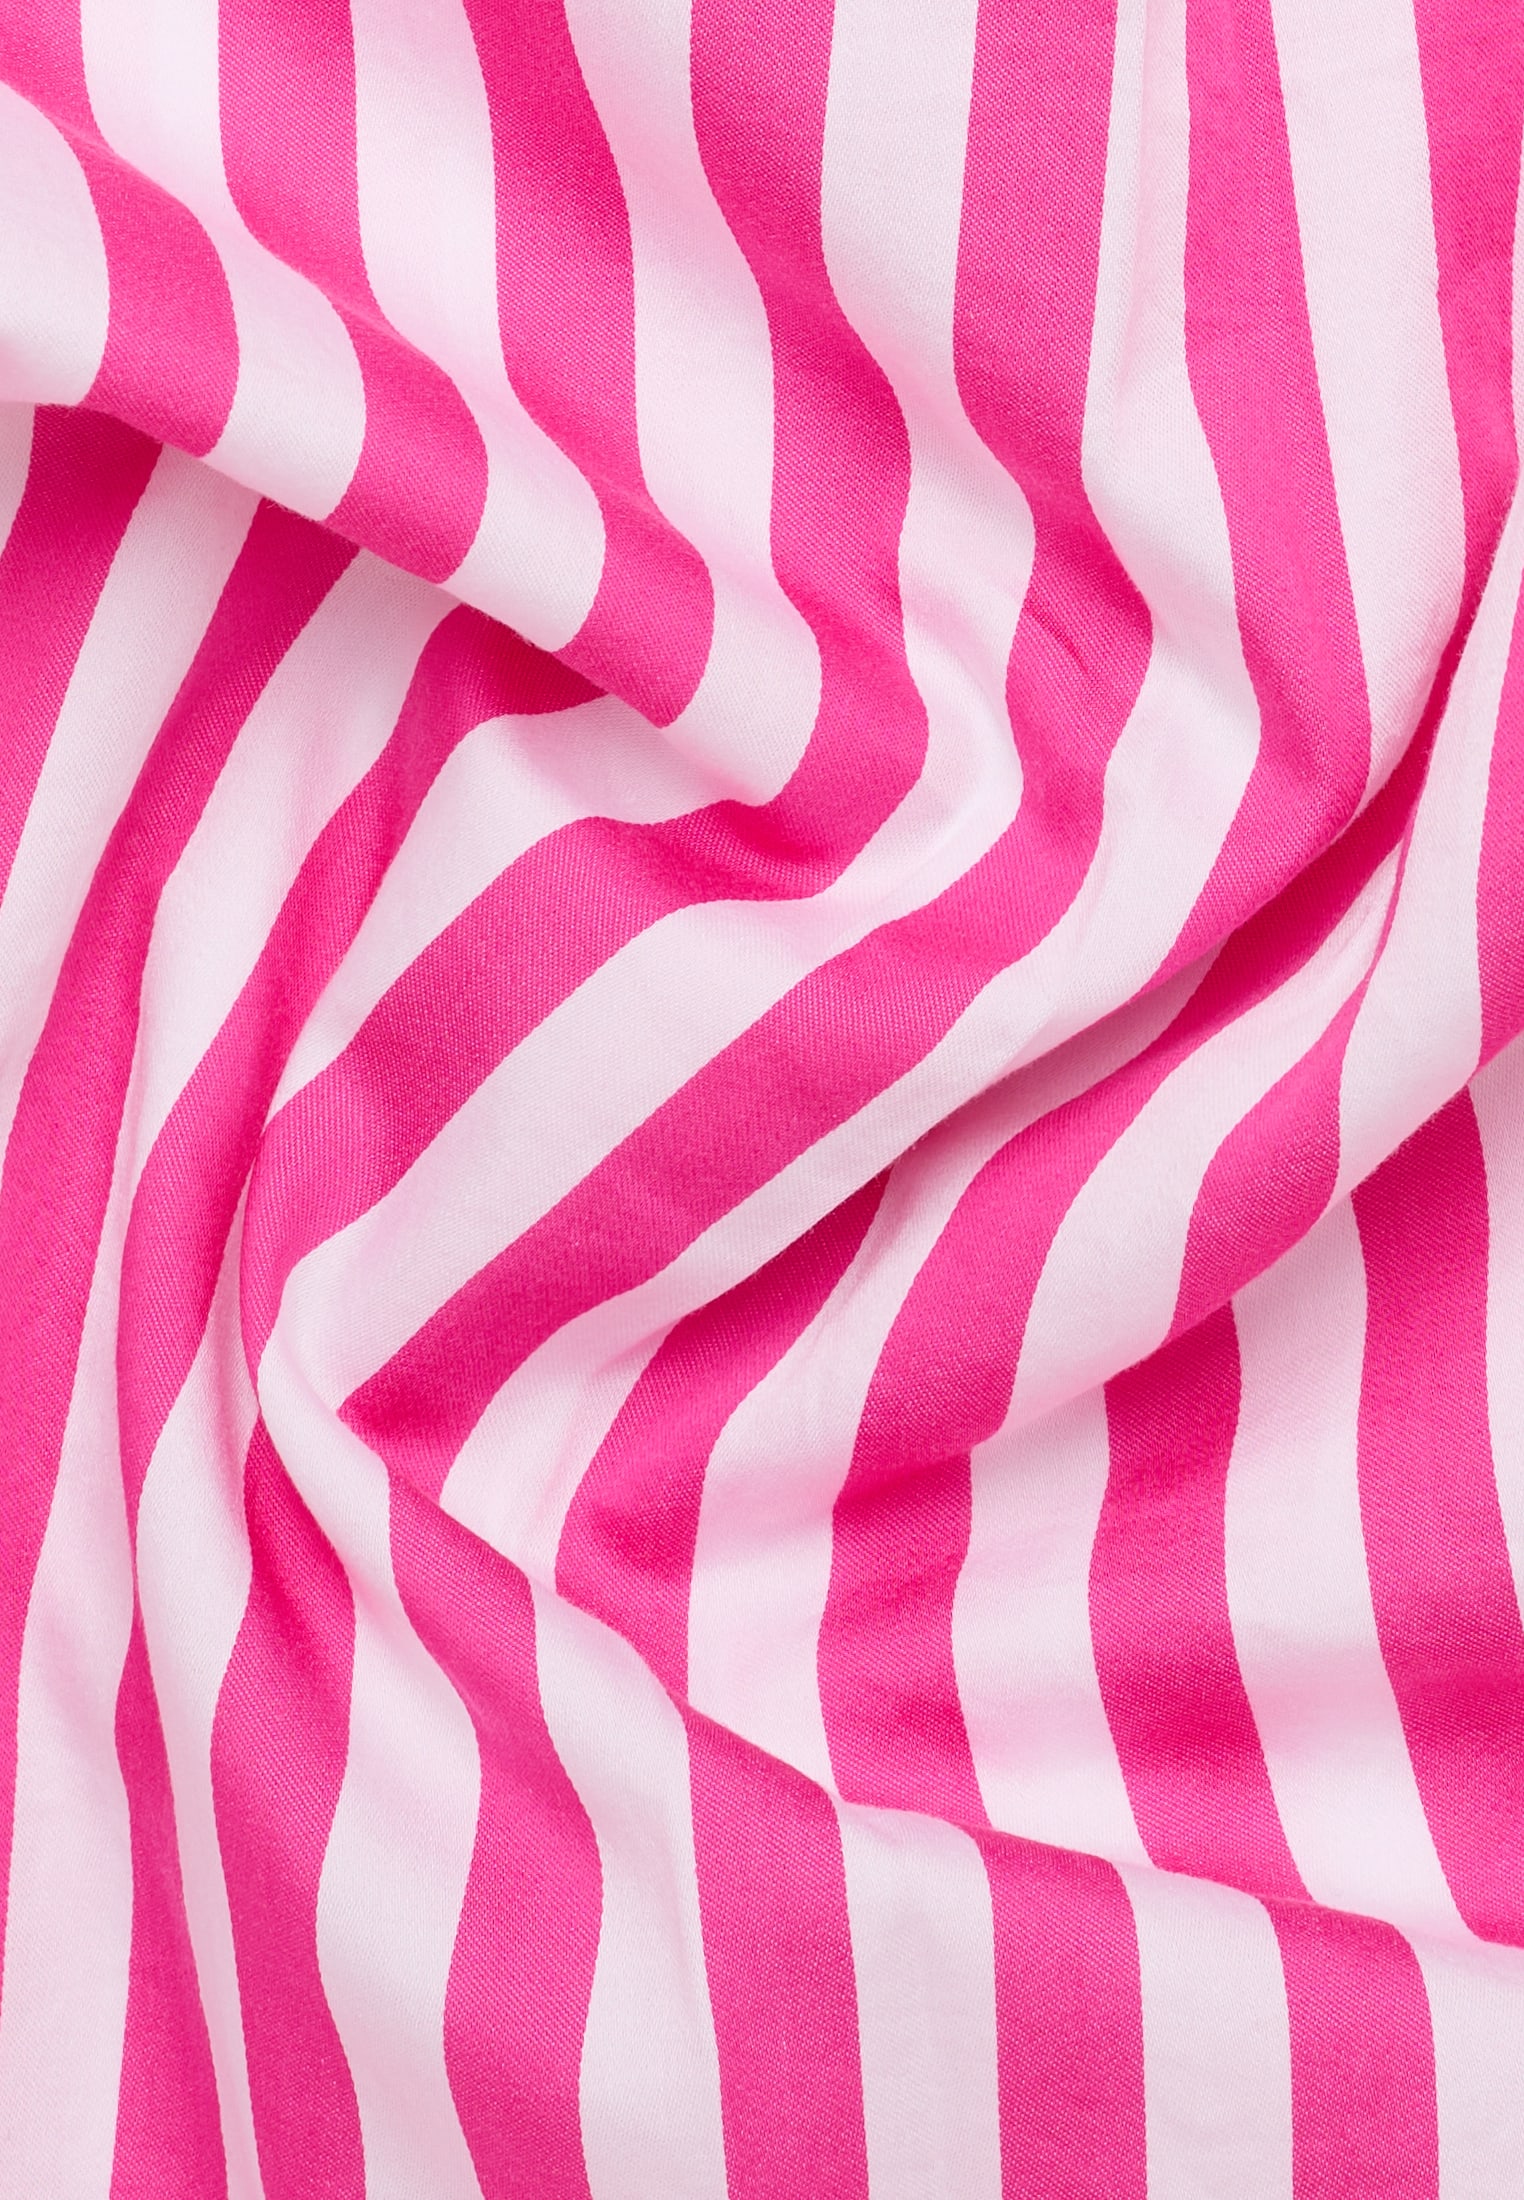 Hemdbluse in pink gestreift | Langarm 34 2BL04454-15-21-34-1/1 pink | | 